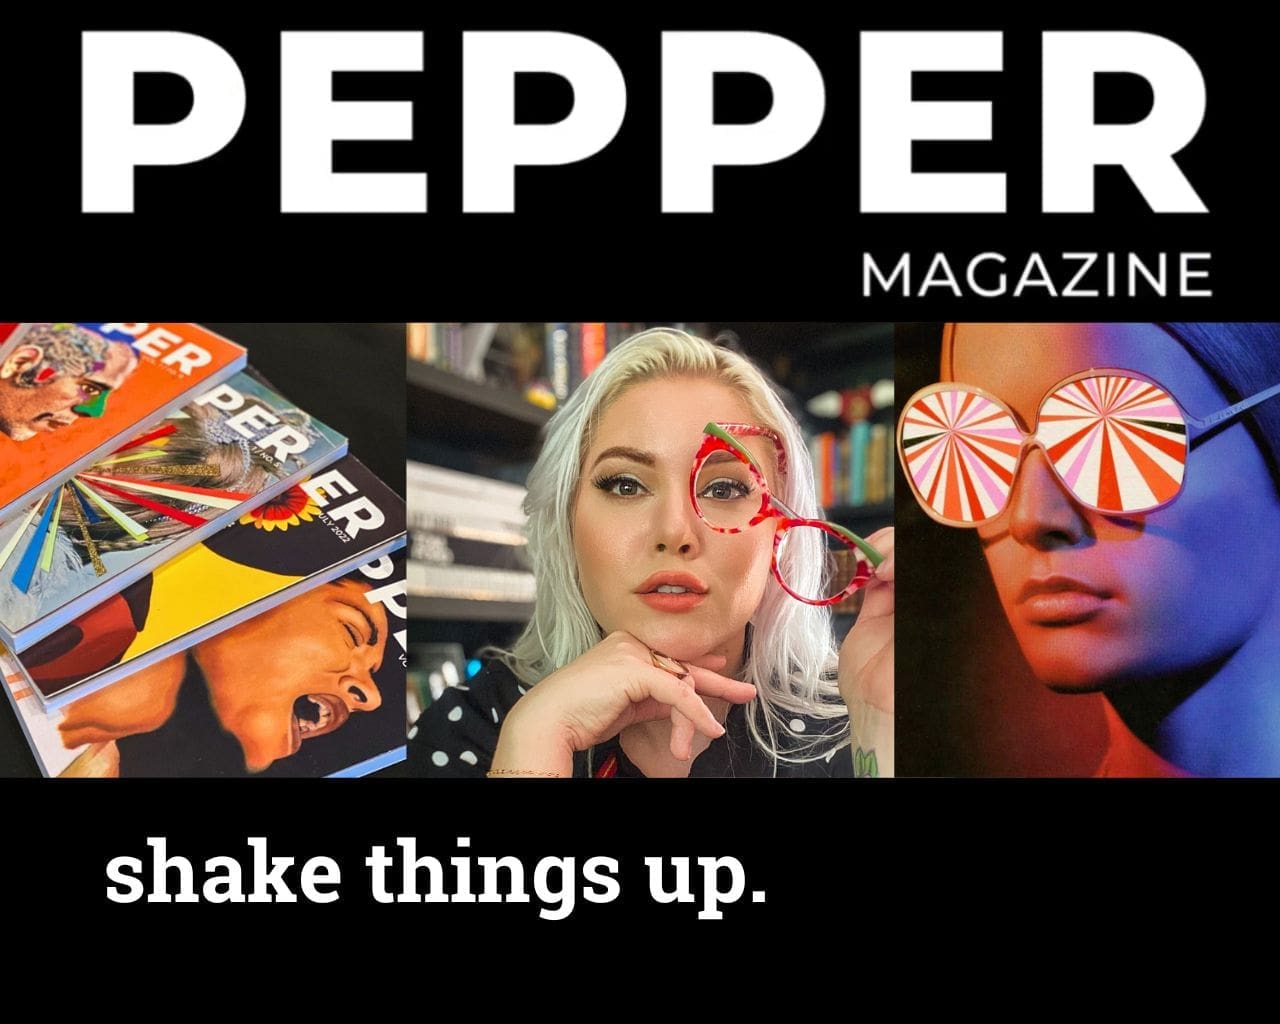 Celebrating The Human Spirit With PEPPER Magazine